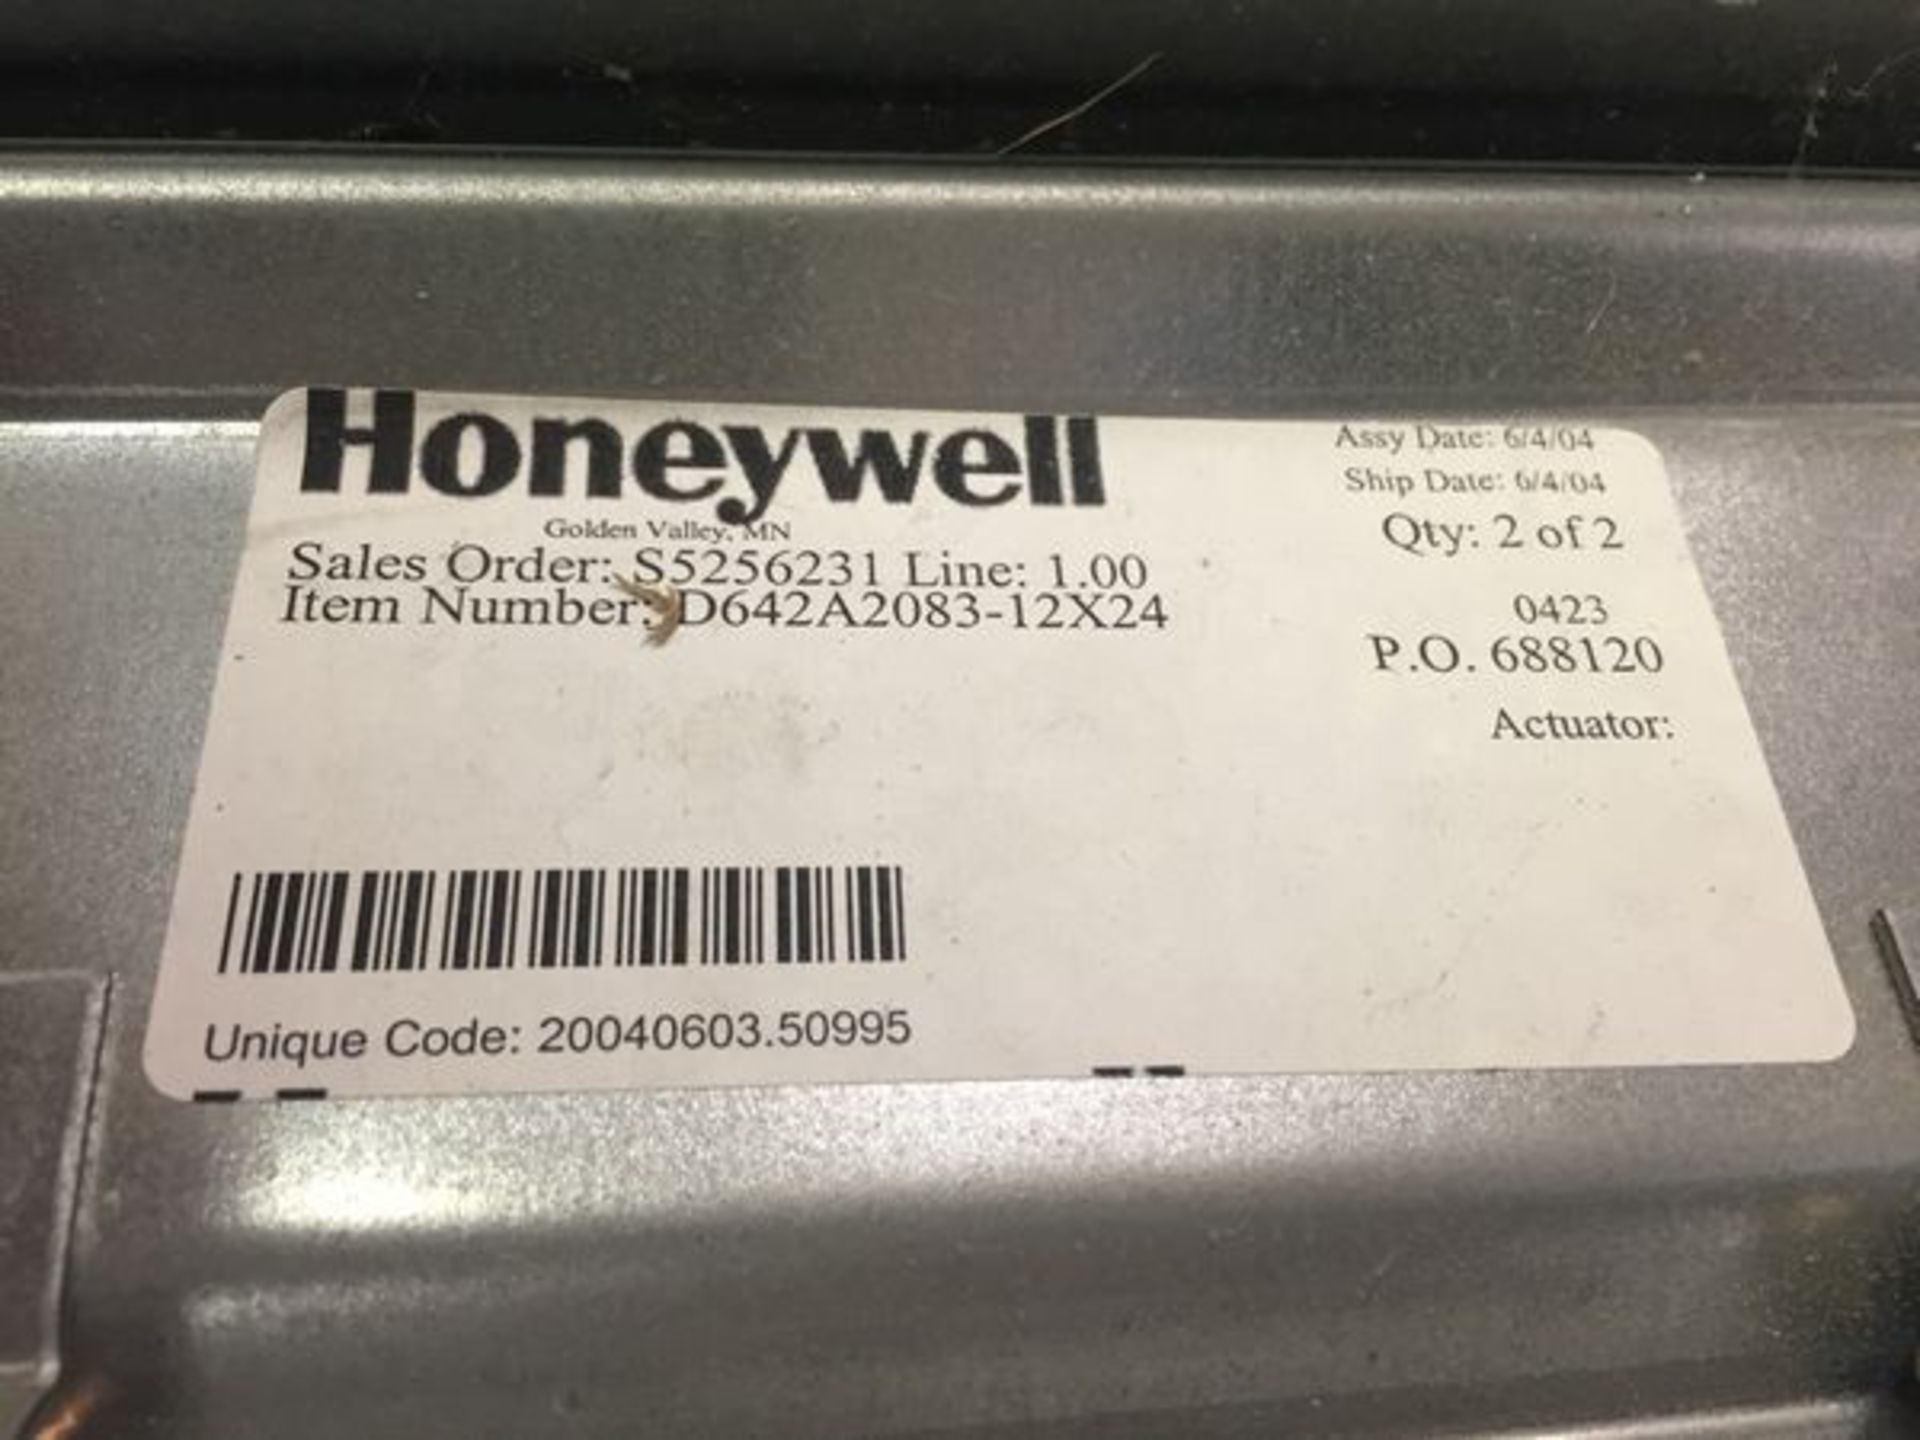 Honeywell d642A2083-12x24 - Image 2 of 5